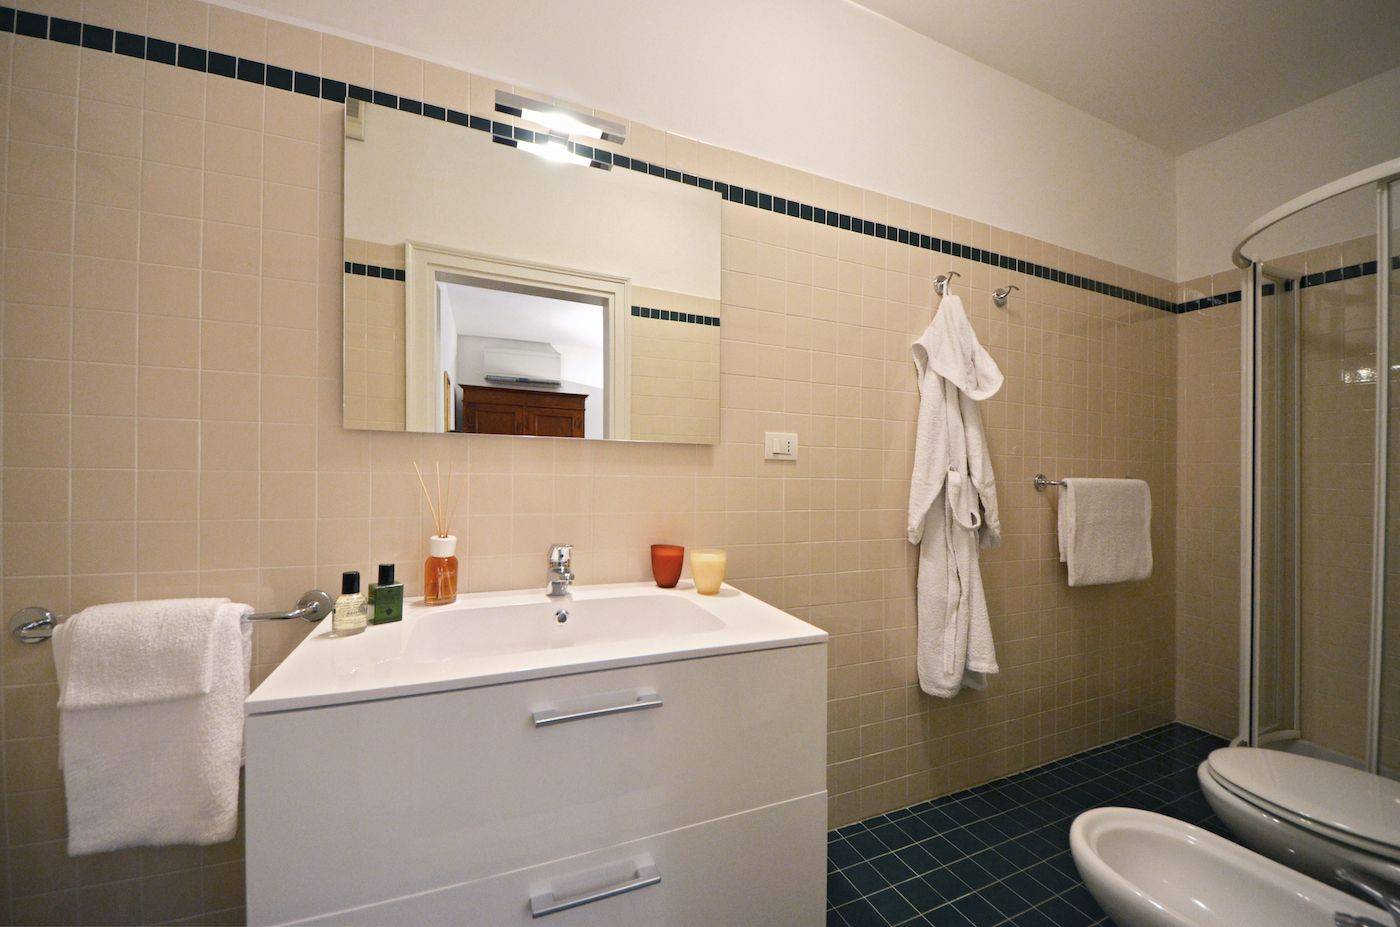 the en-suite bathroom of the second bedroom has a shower cabin